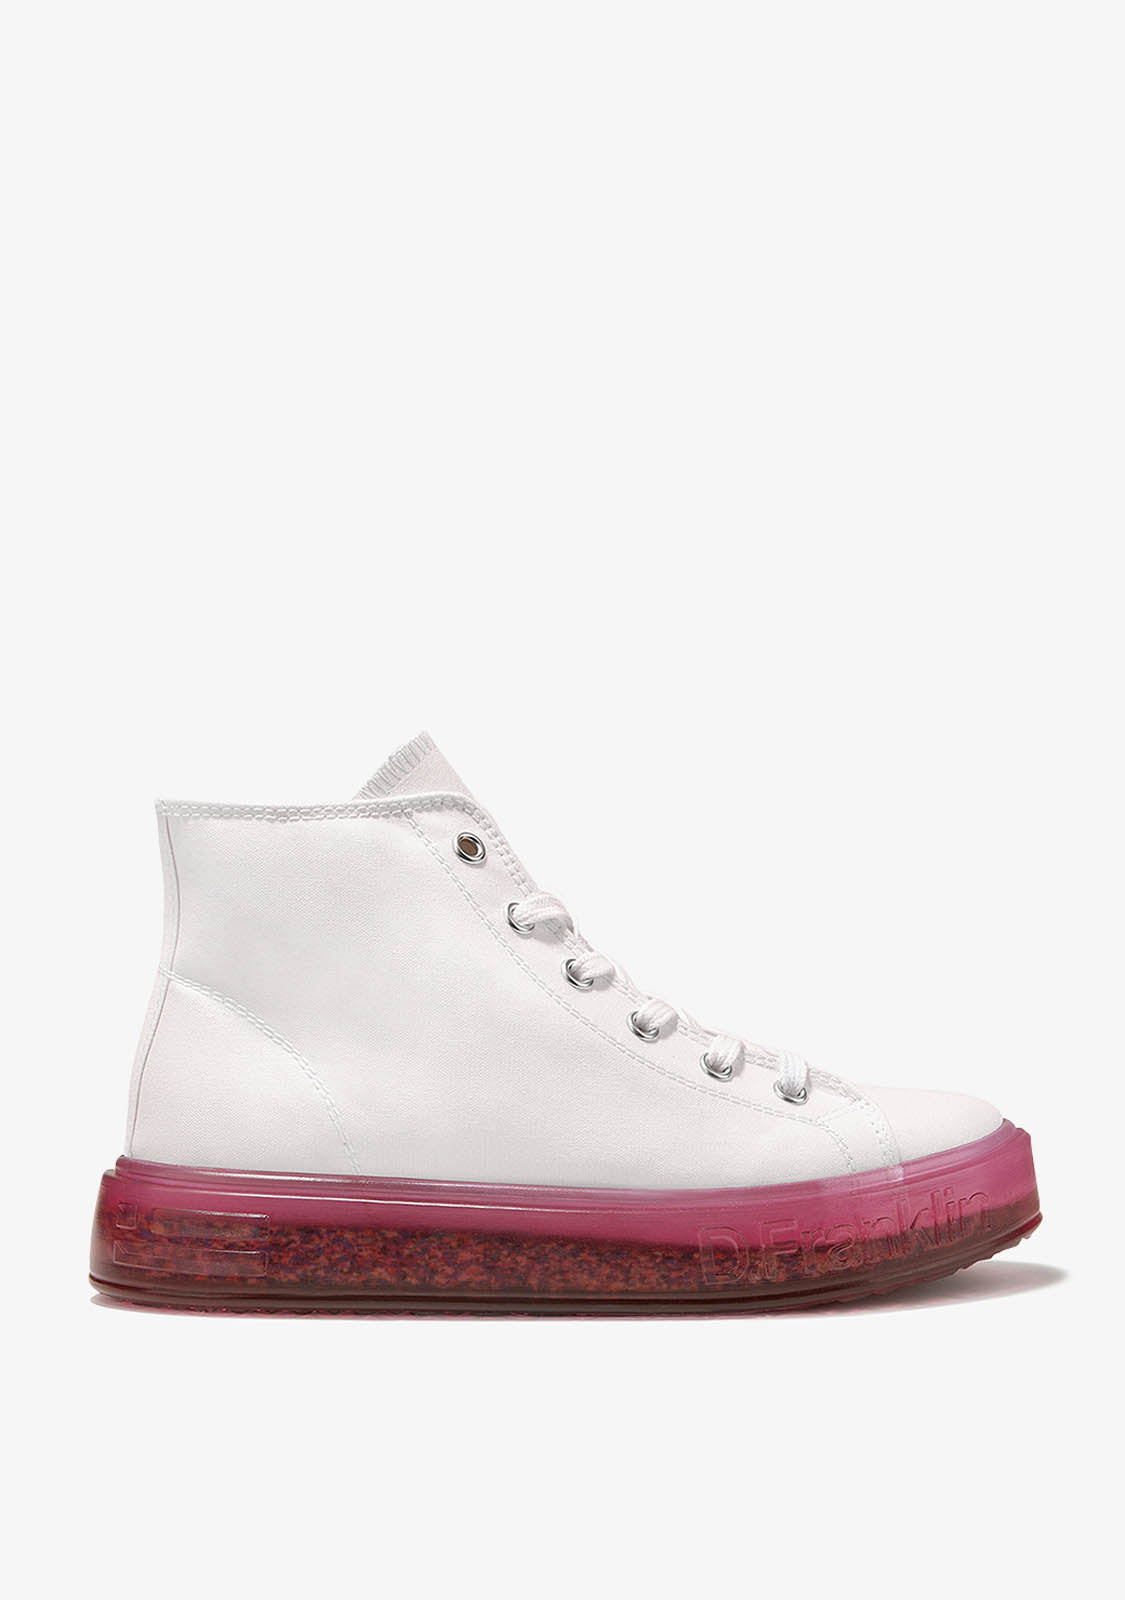 Gumme Superstar White / Pink